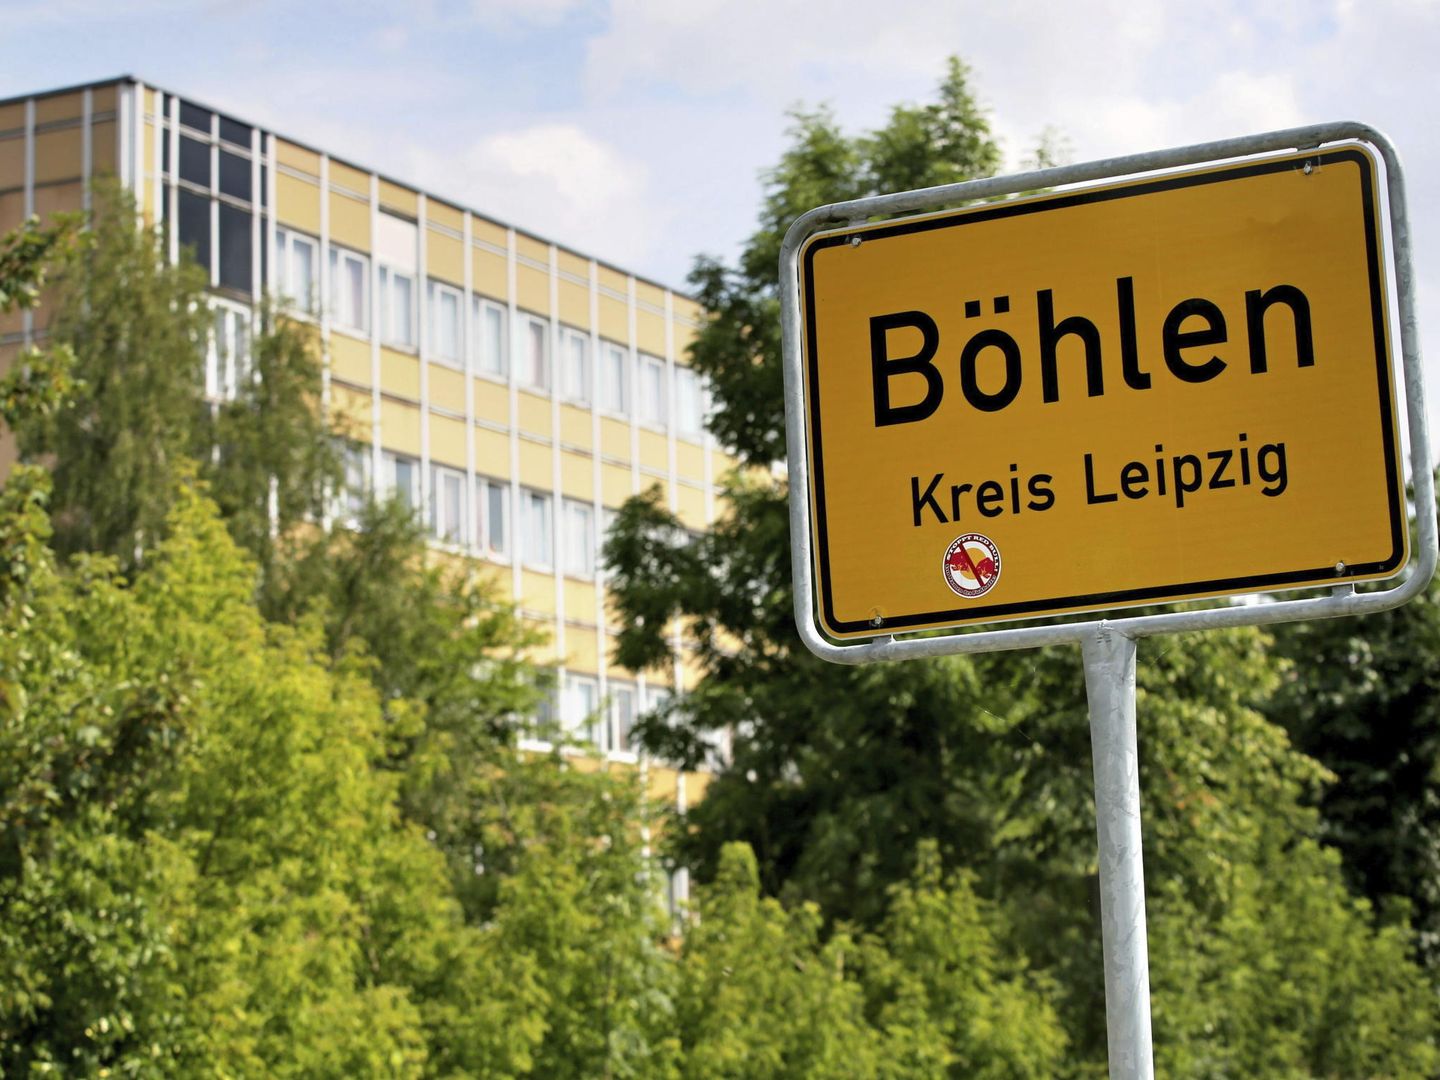 Vista de la fachada un centro de refugiados en Böhlen atacado a tiros  (Efe).